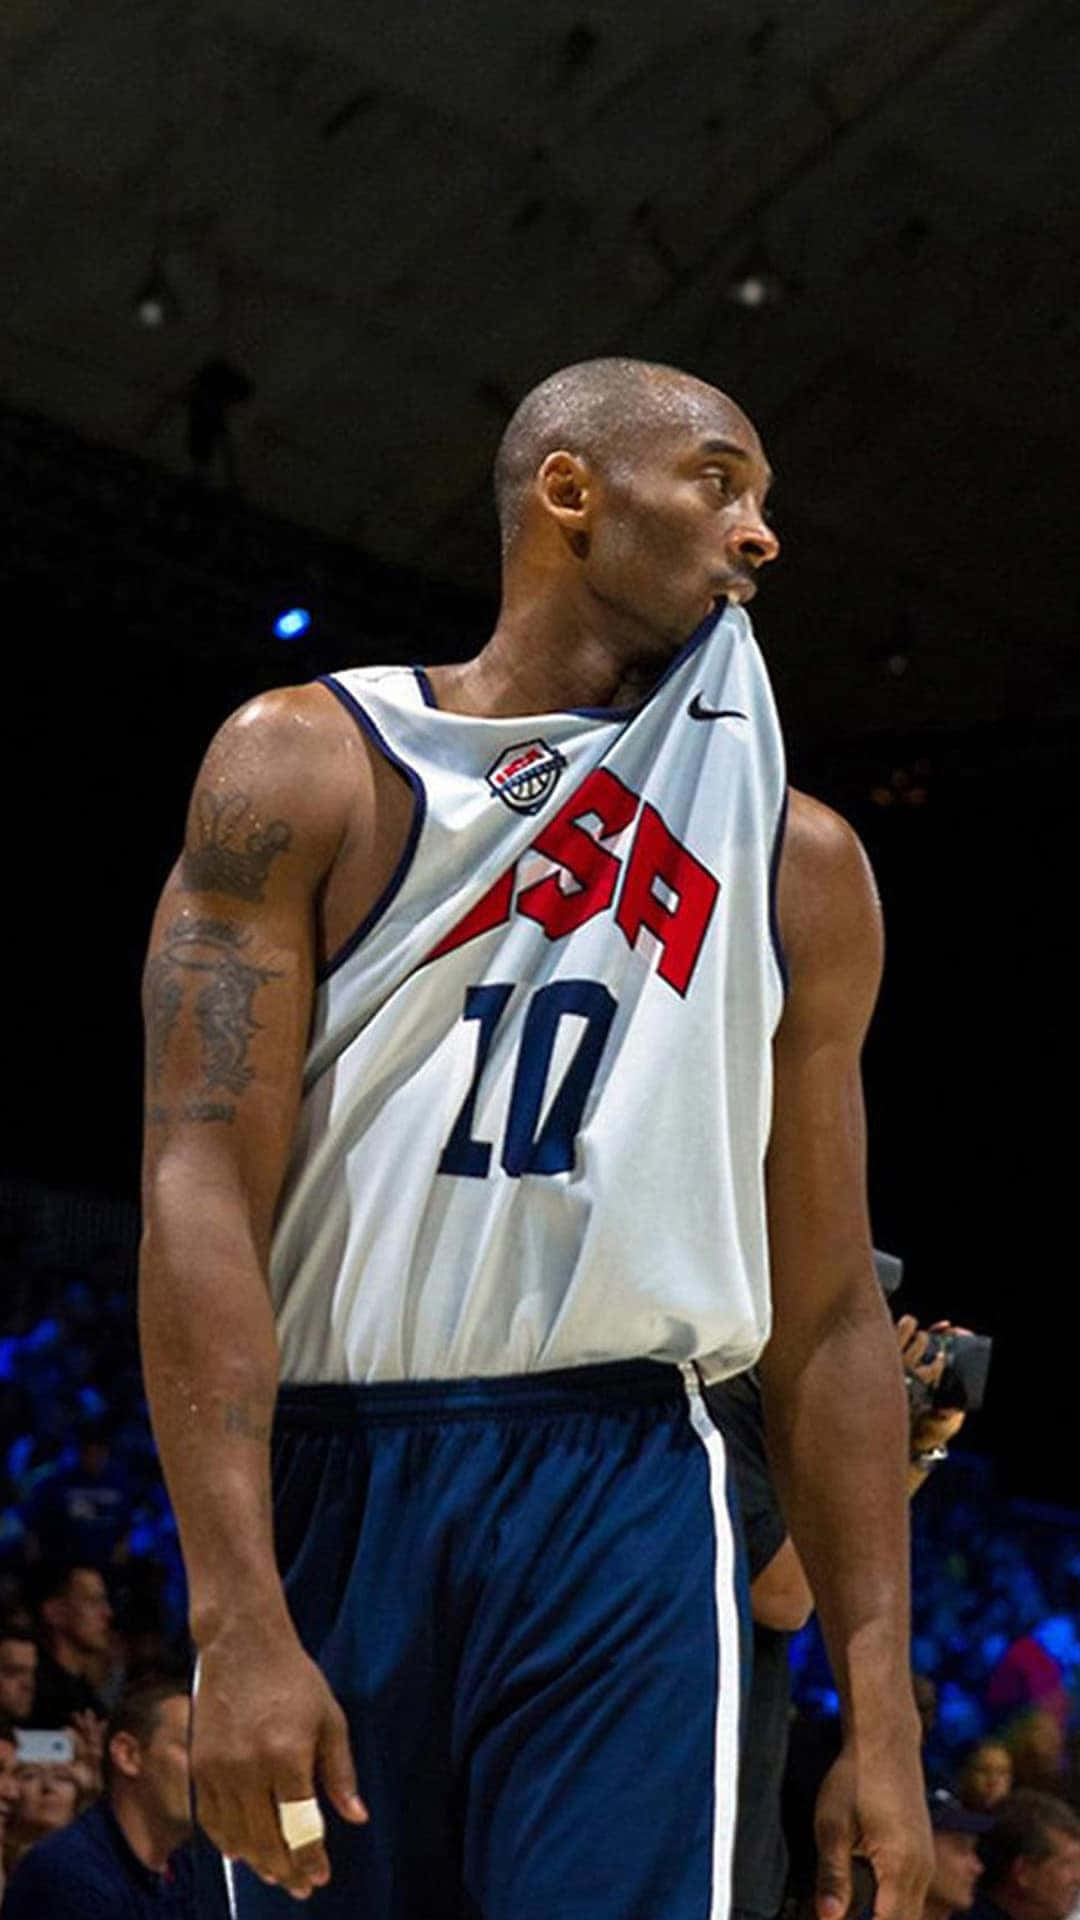 "Remembering Kobe Bryant - The Legend"